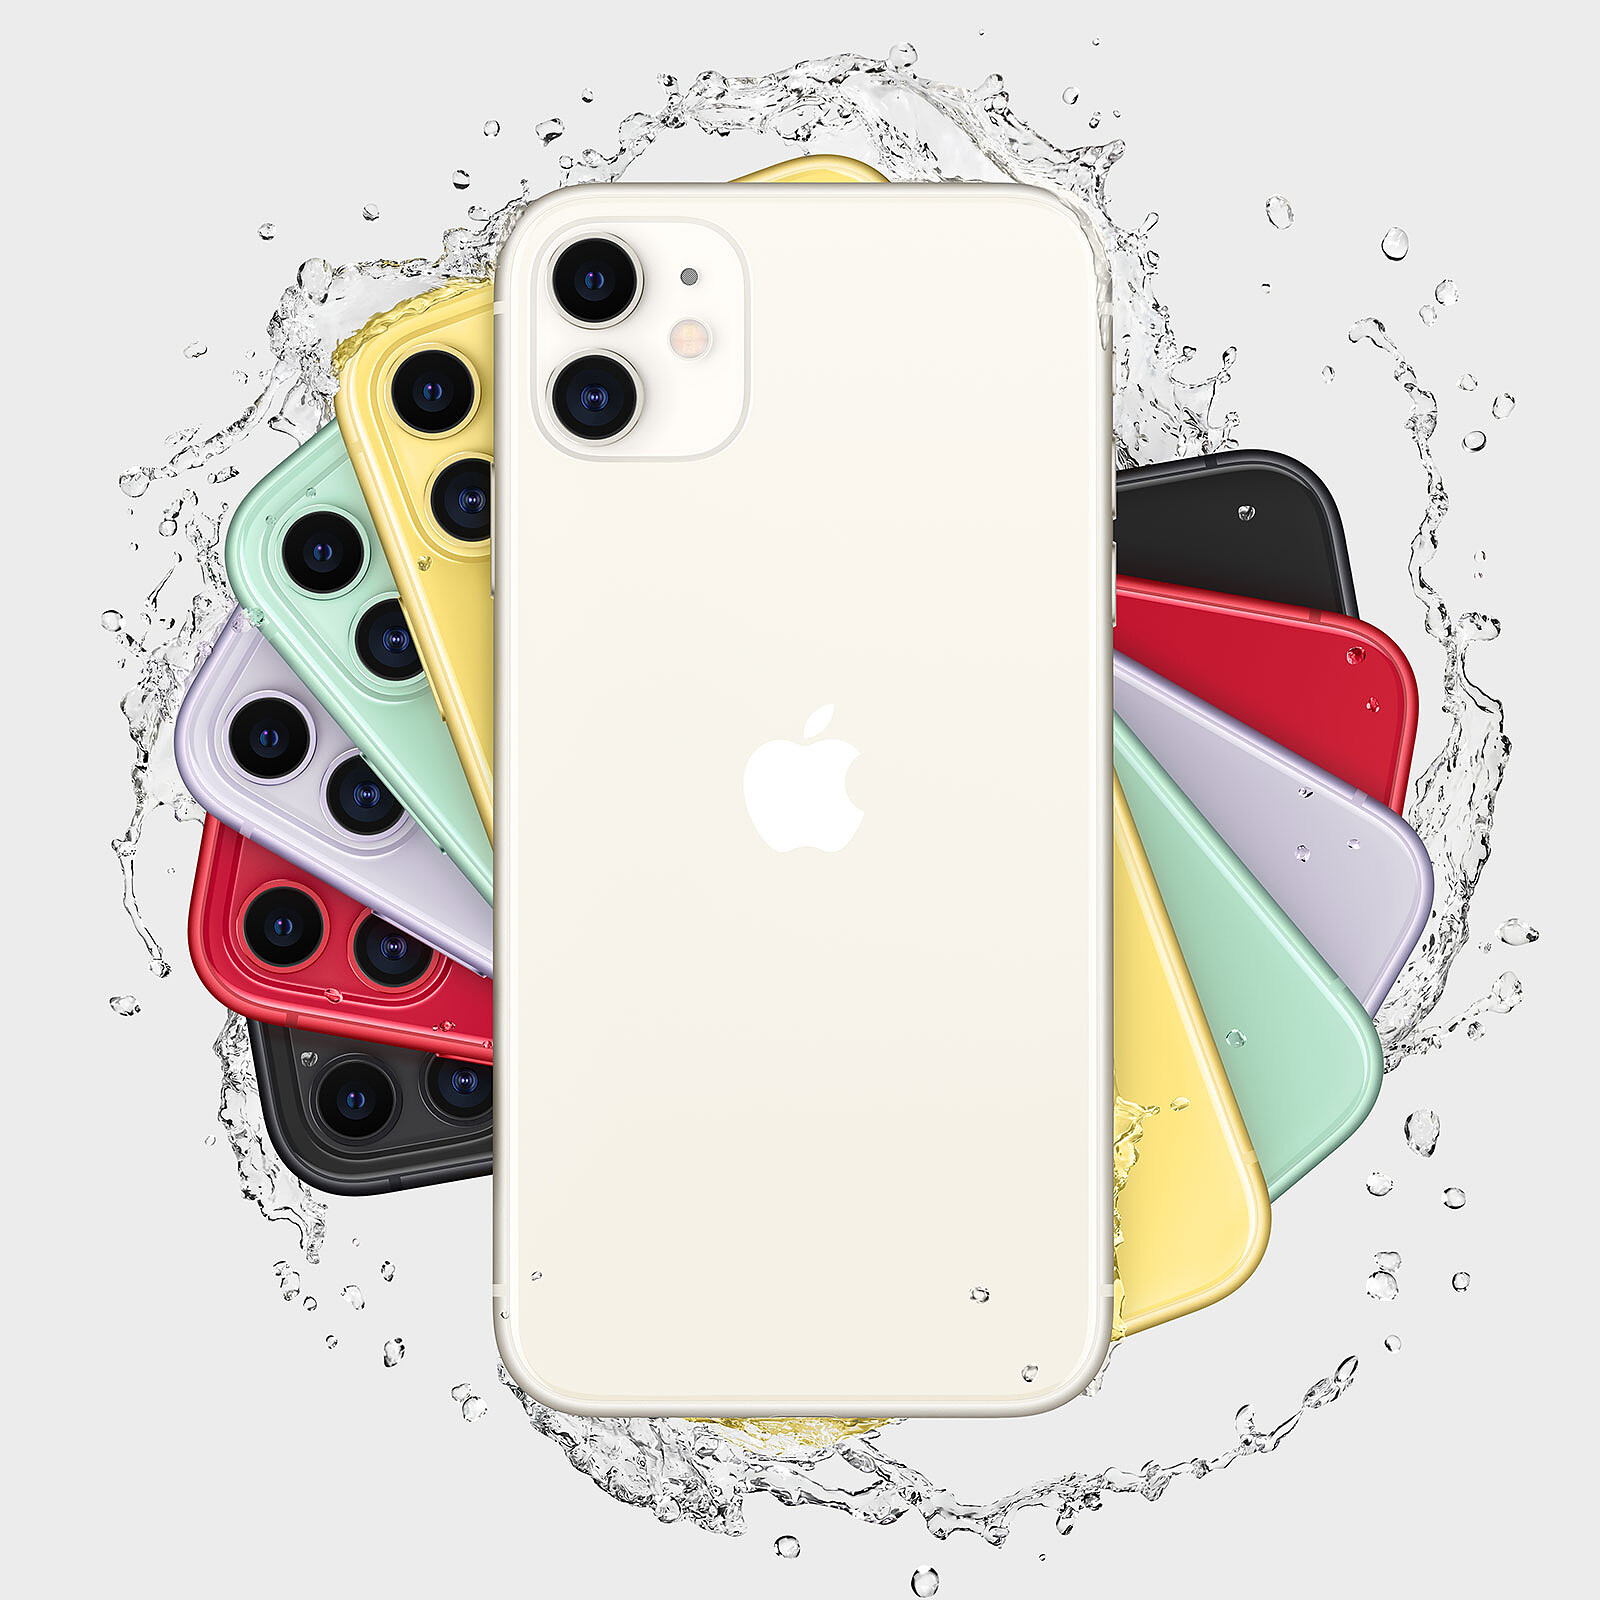 Apple iPhone 11 64GB White - Mobile phone & smartphone - LDLC 3 